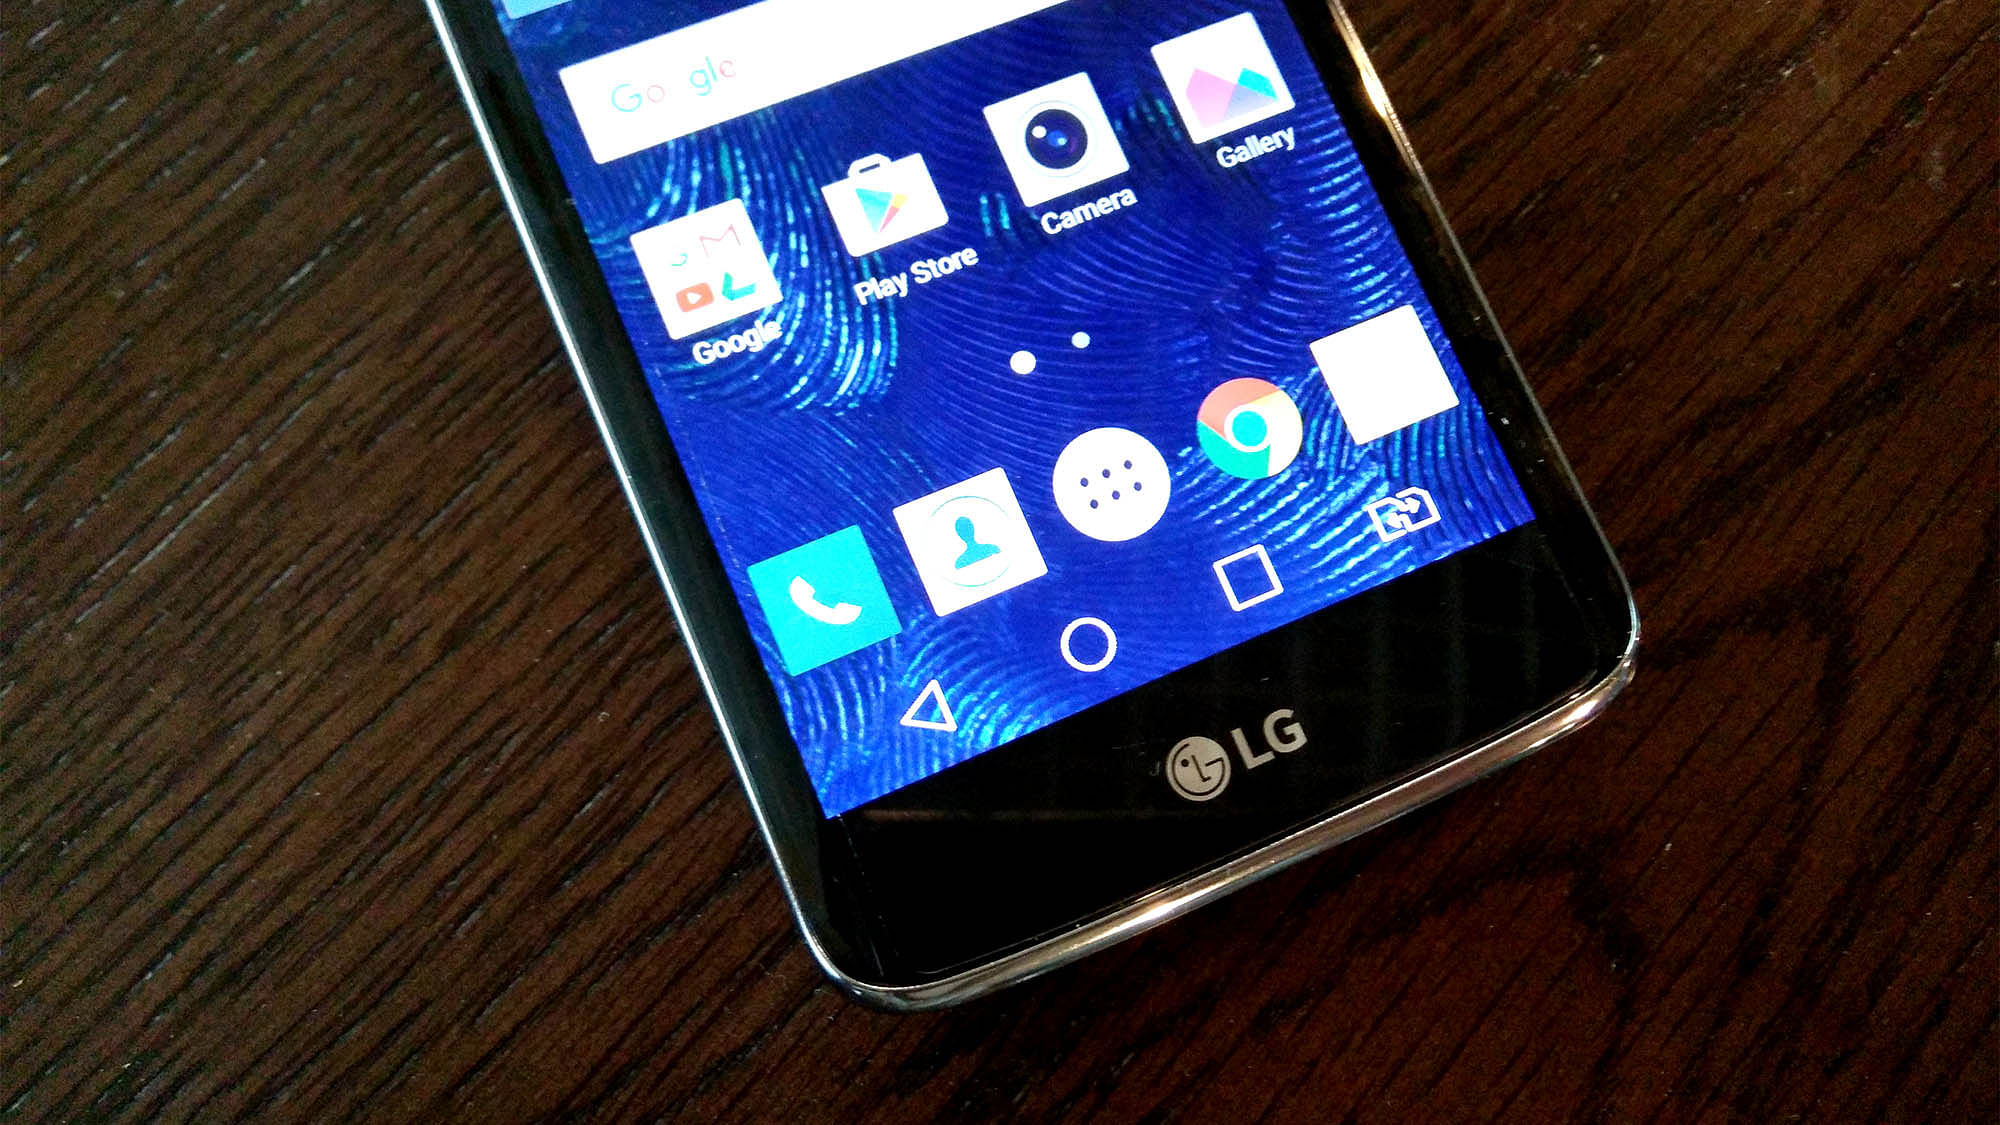 LG K7 smartphone. (Photo: <b>The Quint</b>)